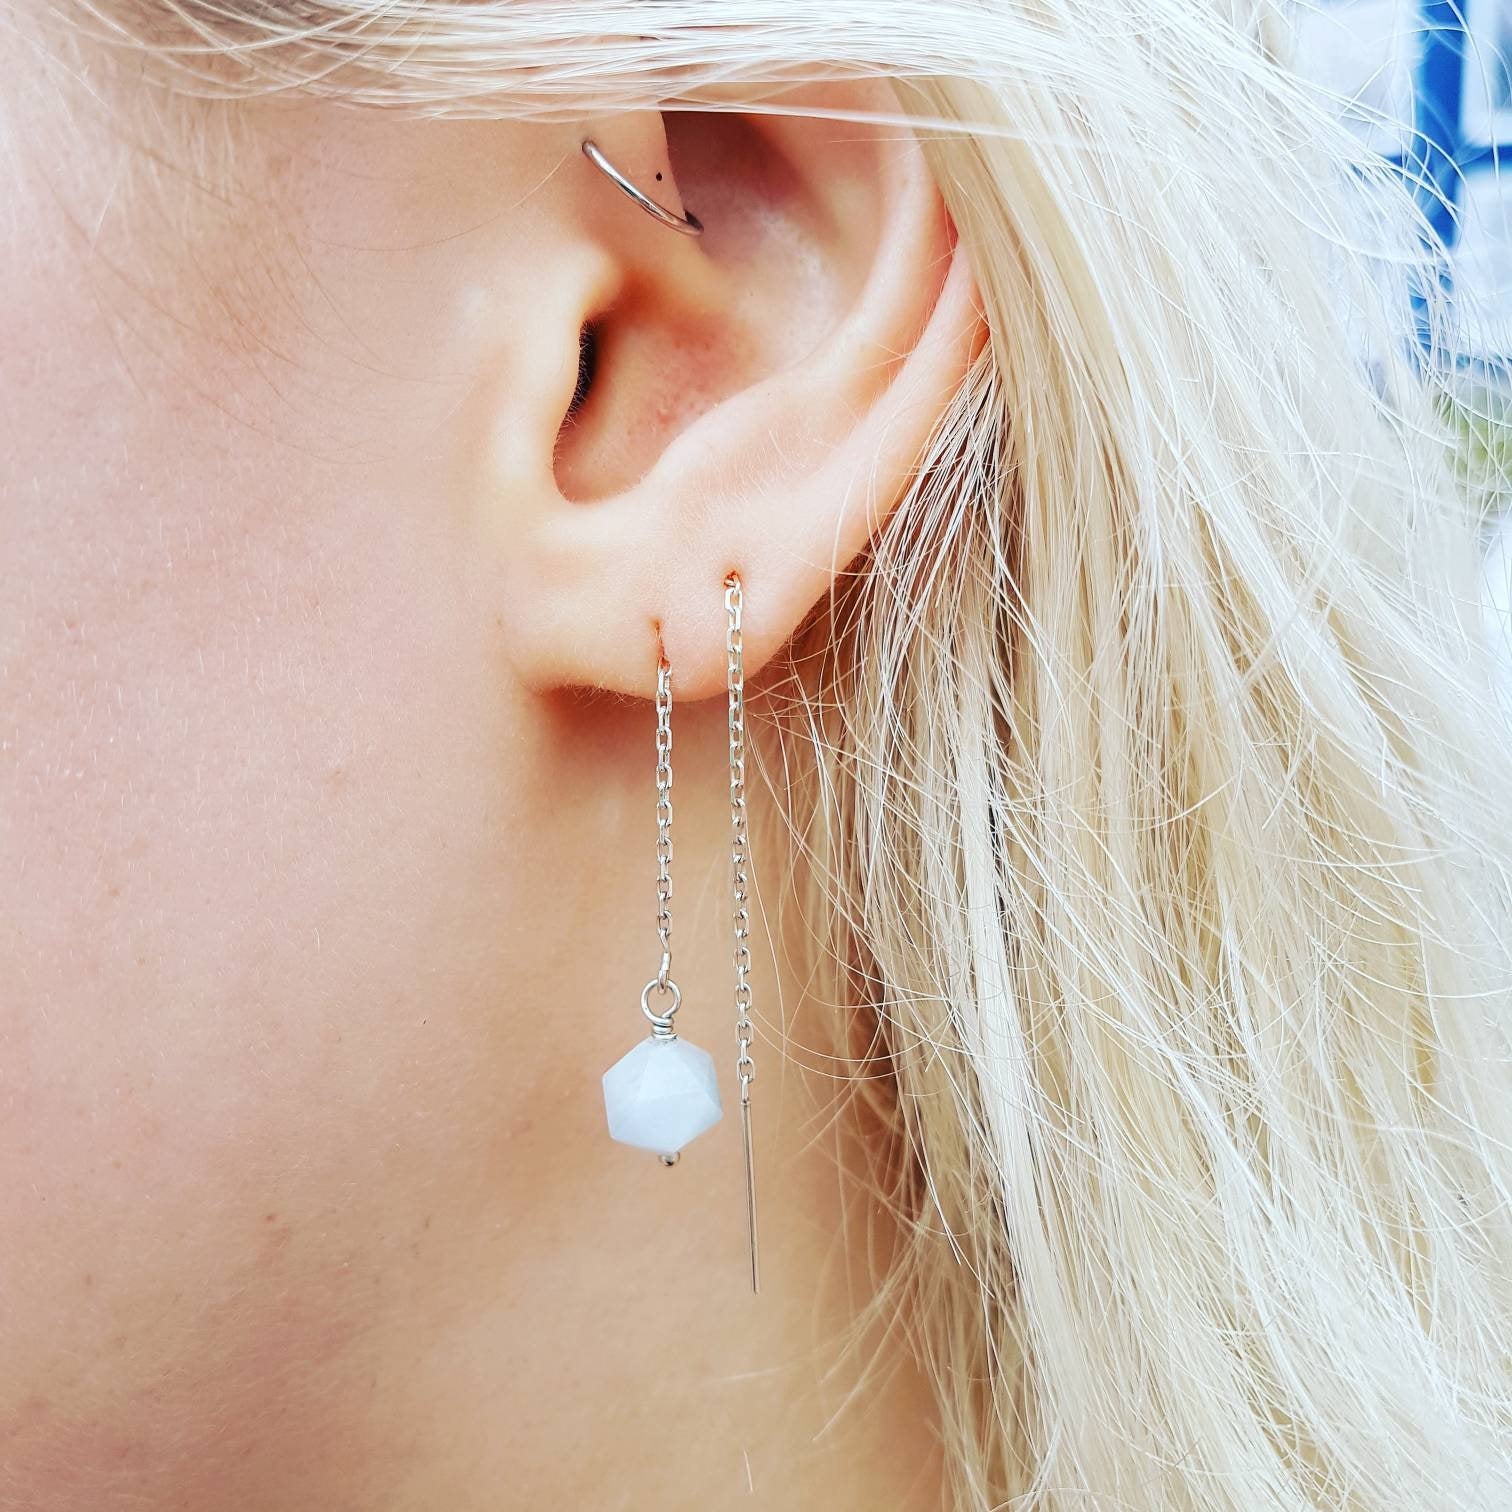 Natural pearl sterling silver threader earrings